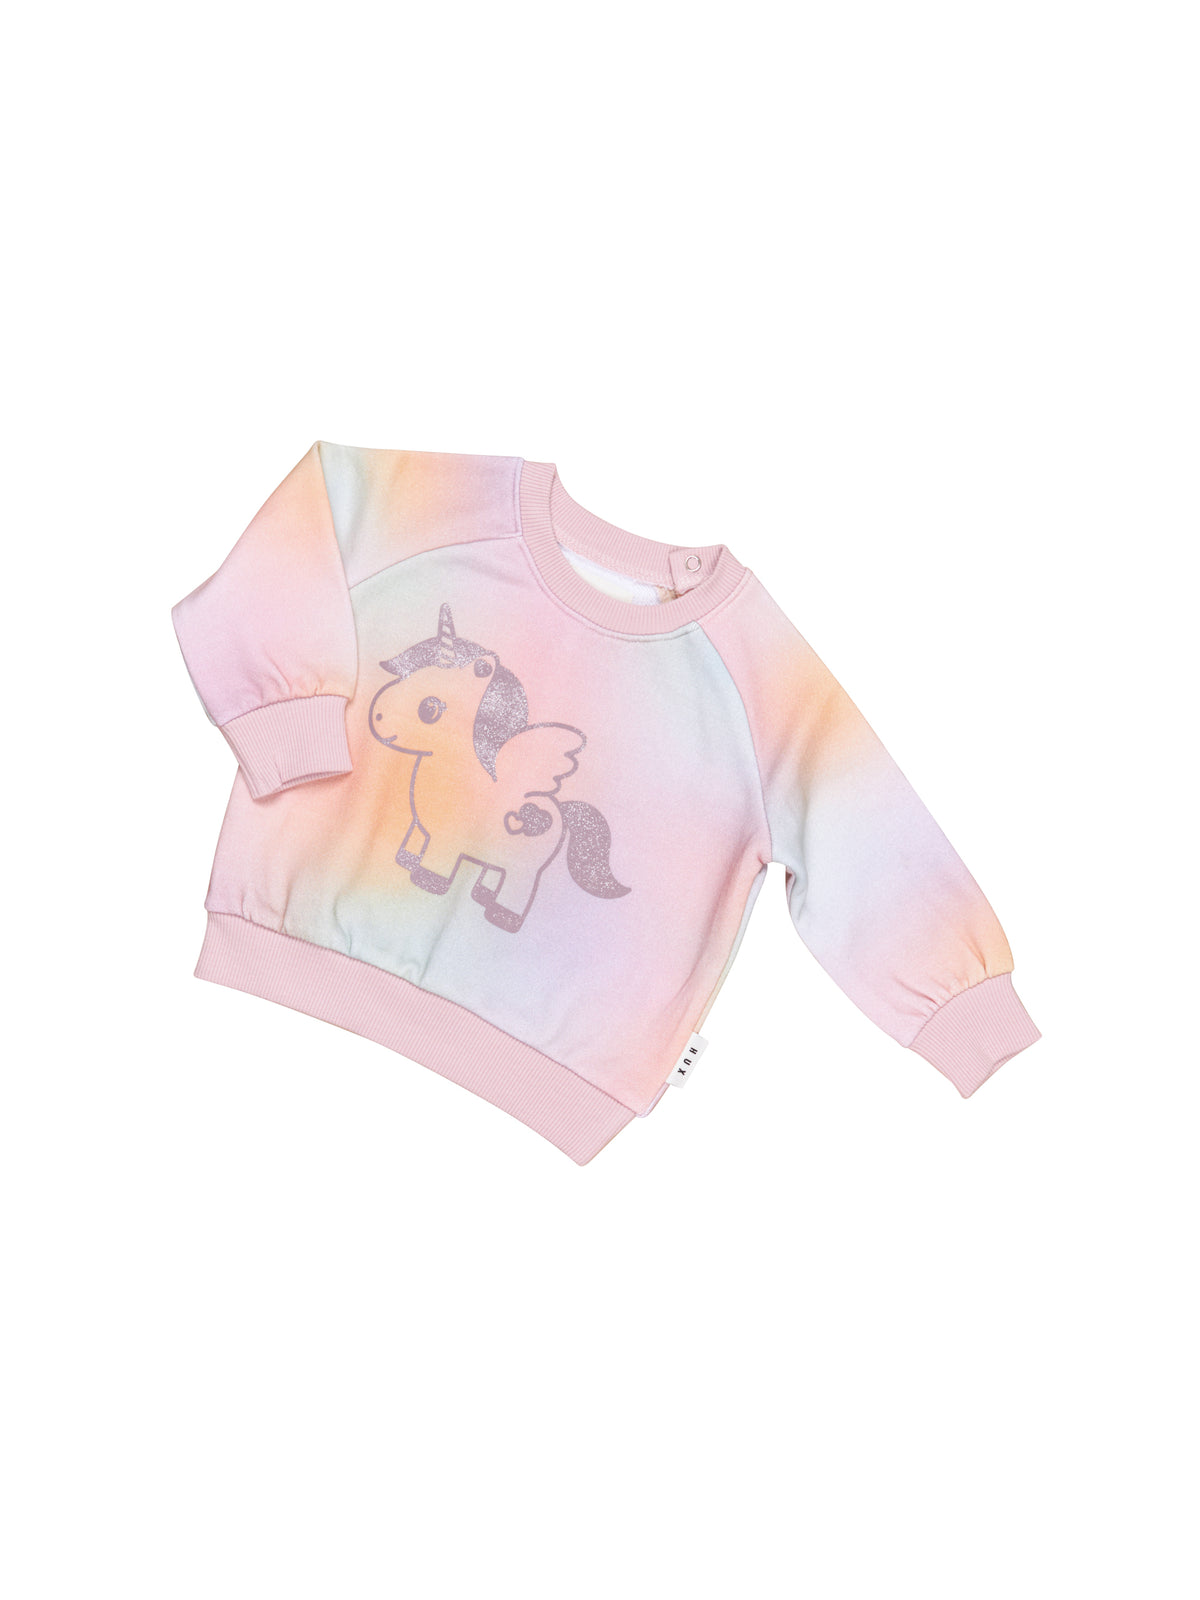 Rainbow Swirl Glittercorn Sweatshirt - Multi